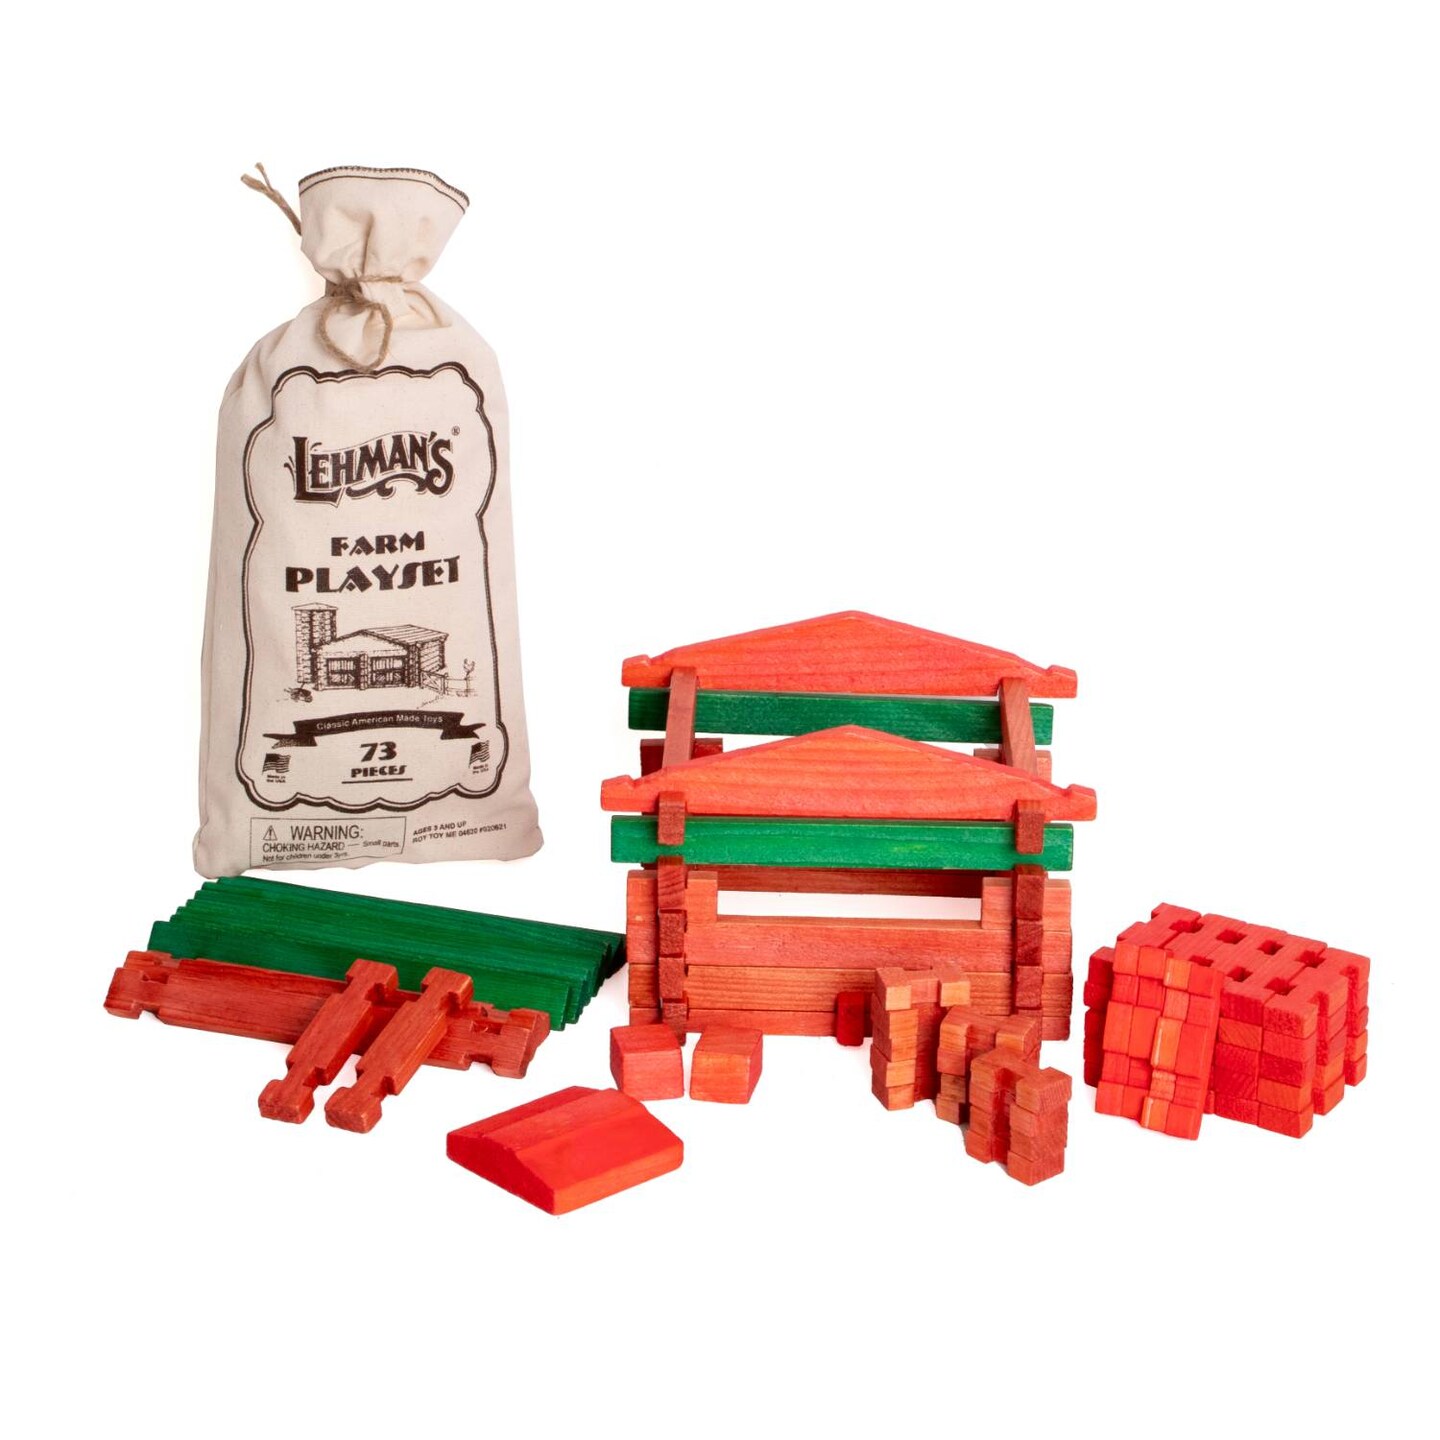 Lehman&#x27;s Toy Log Farm Playset, Classic American Made Building Set, 73 Interlocking Wooden Pieces in Handy Storage Bag